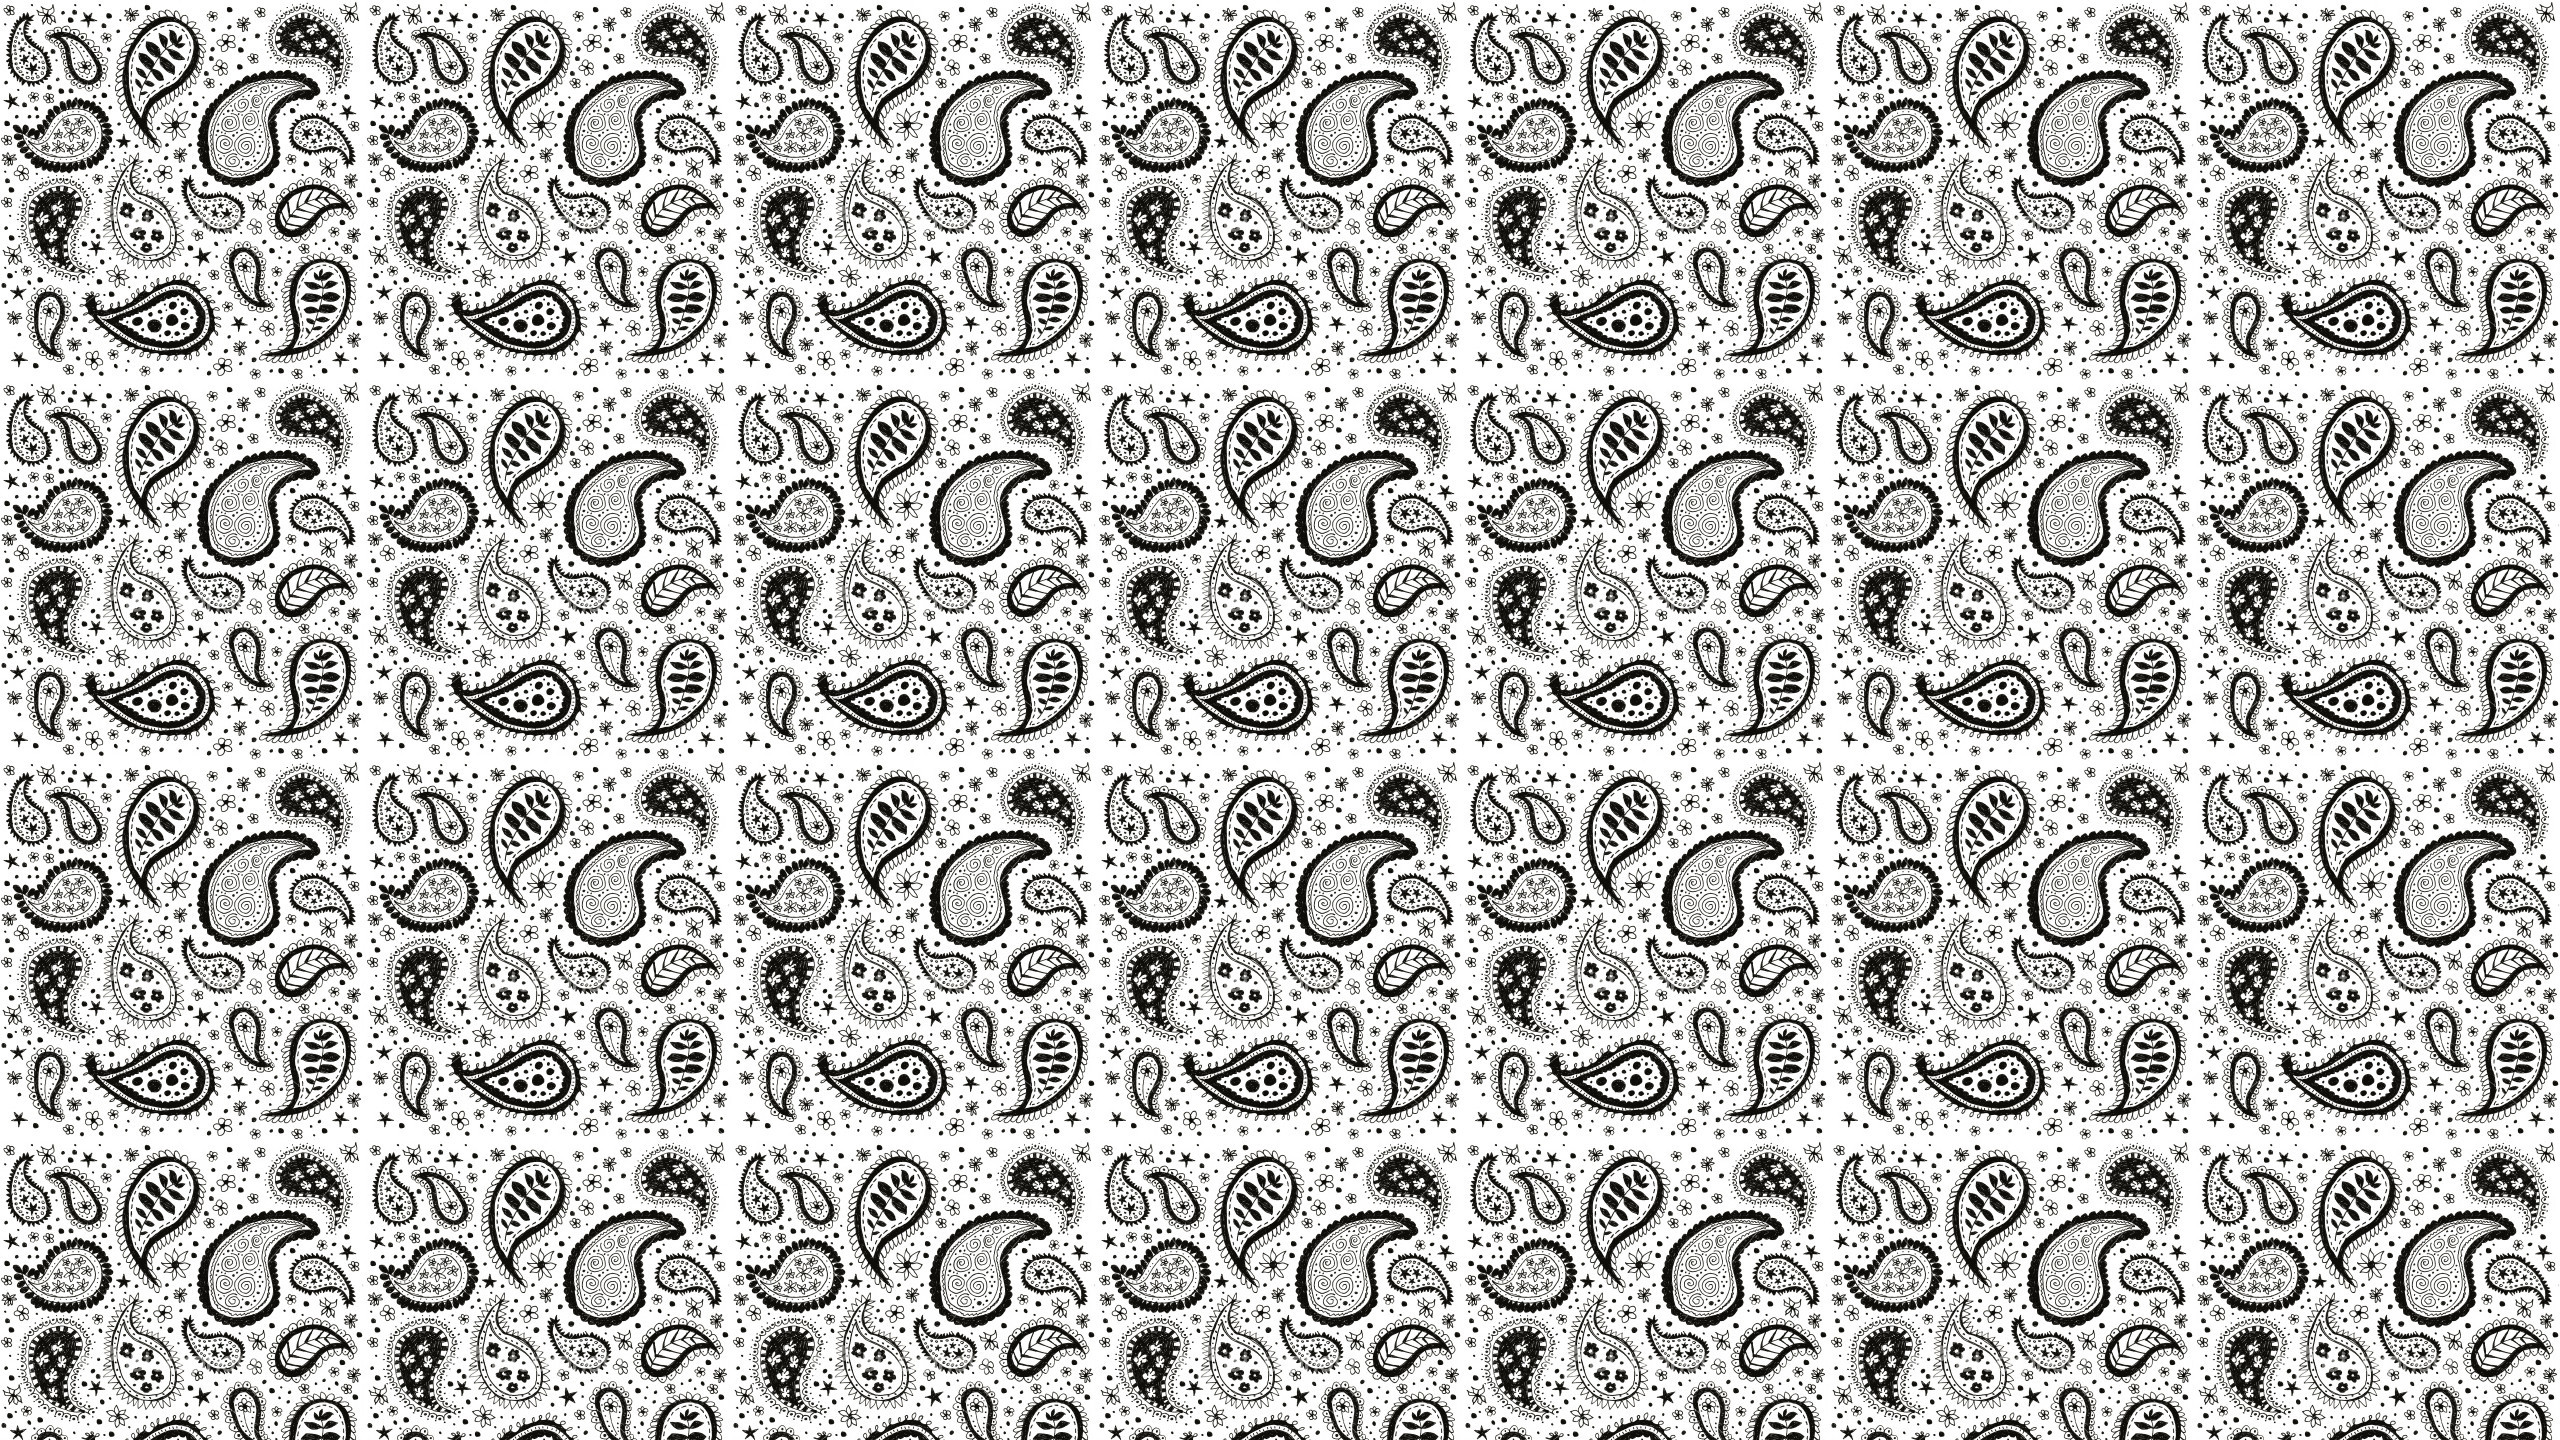 2560x1440 Paisley Black and White Wallpaper Unique Black and White Paisley Wallpaper  ããæ´è½å¥³å­åãã